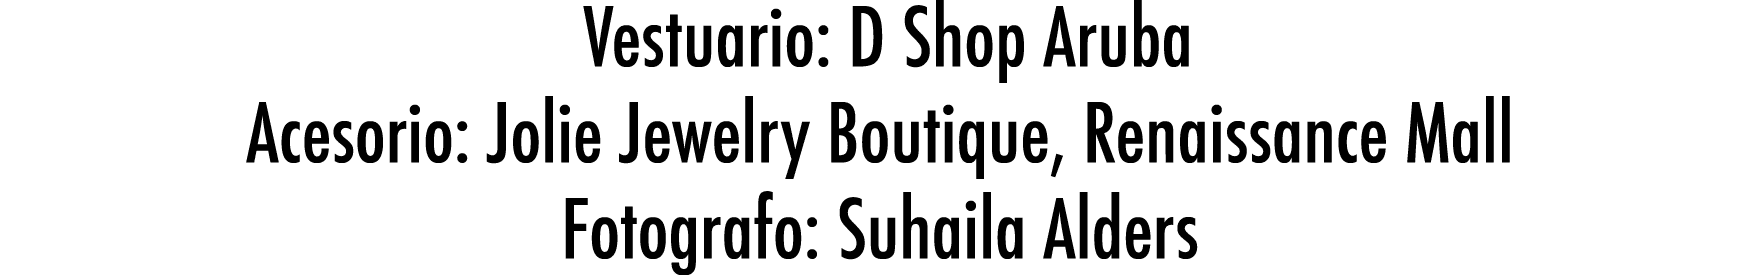  Vestuario: D Shop Aruba Acesorio: Jolie Jewelry Boutique, Renaissance Mall Fotografo: Suhaila Alders